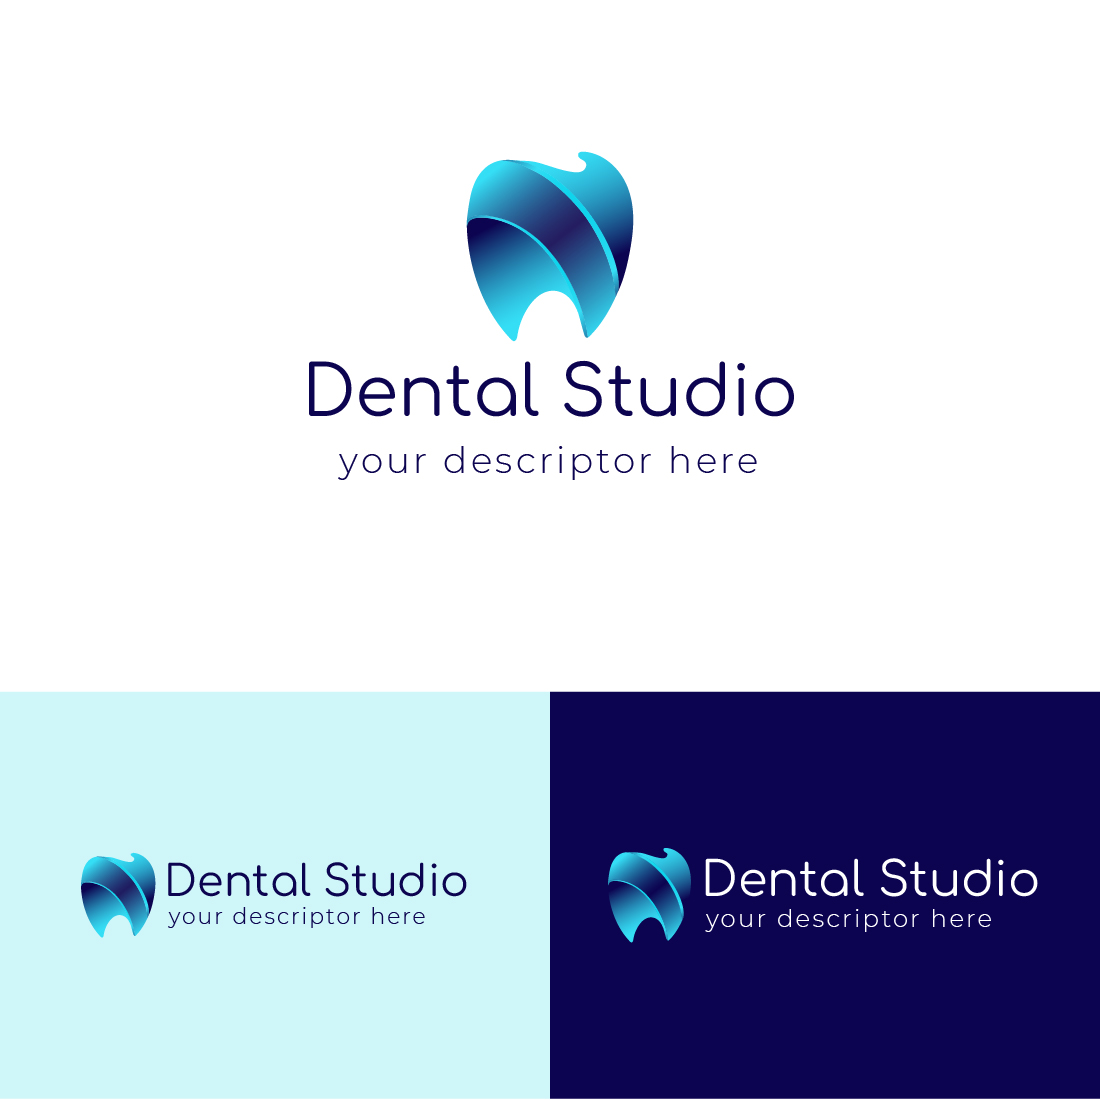 dental logo cover image.